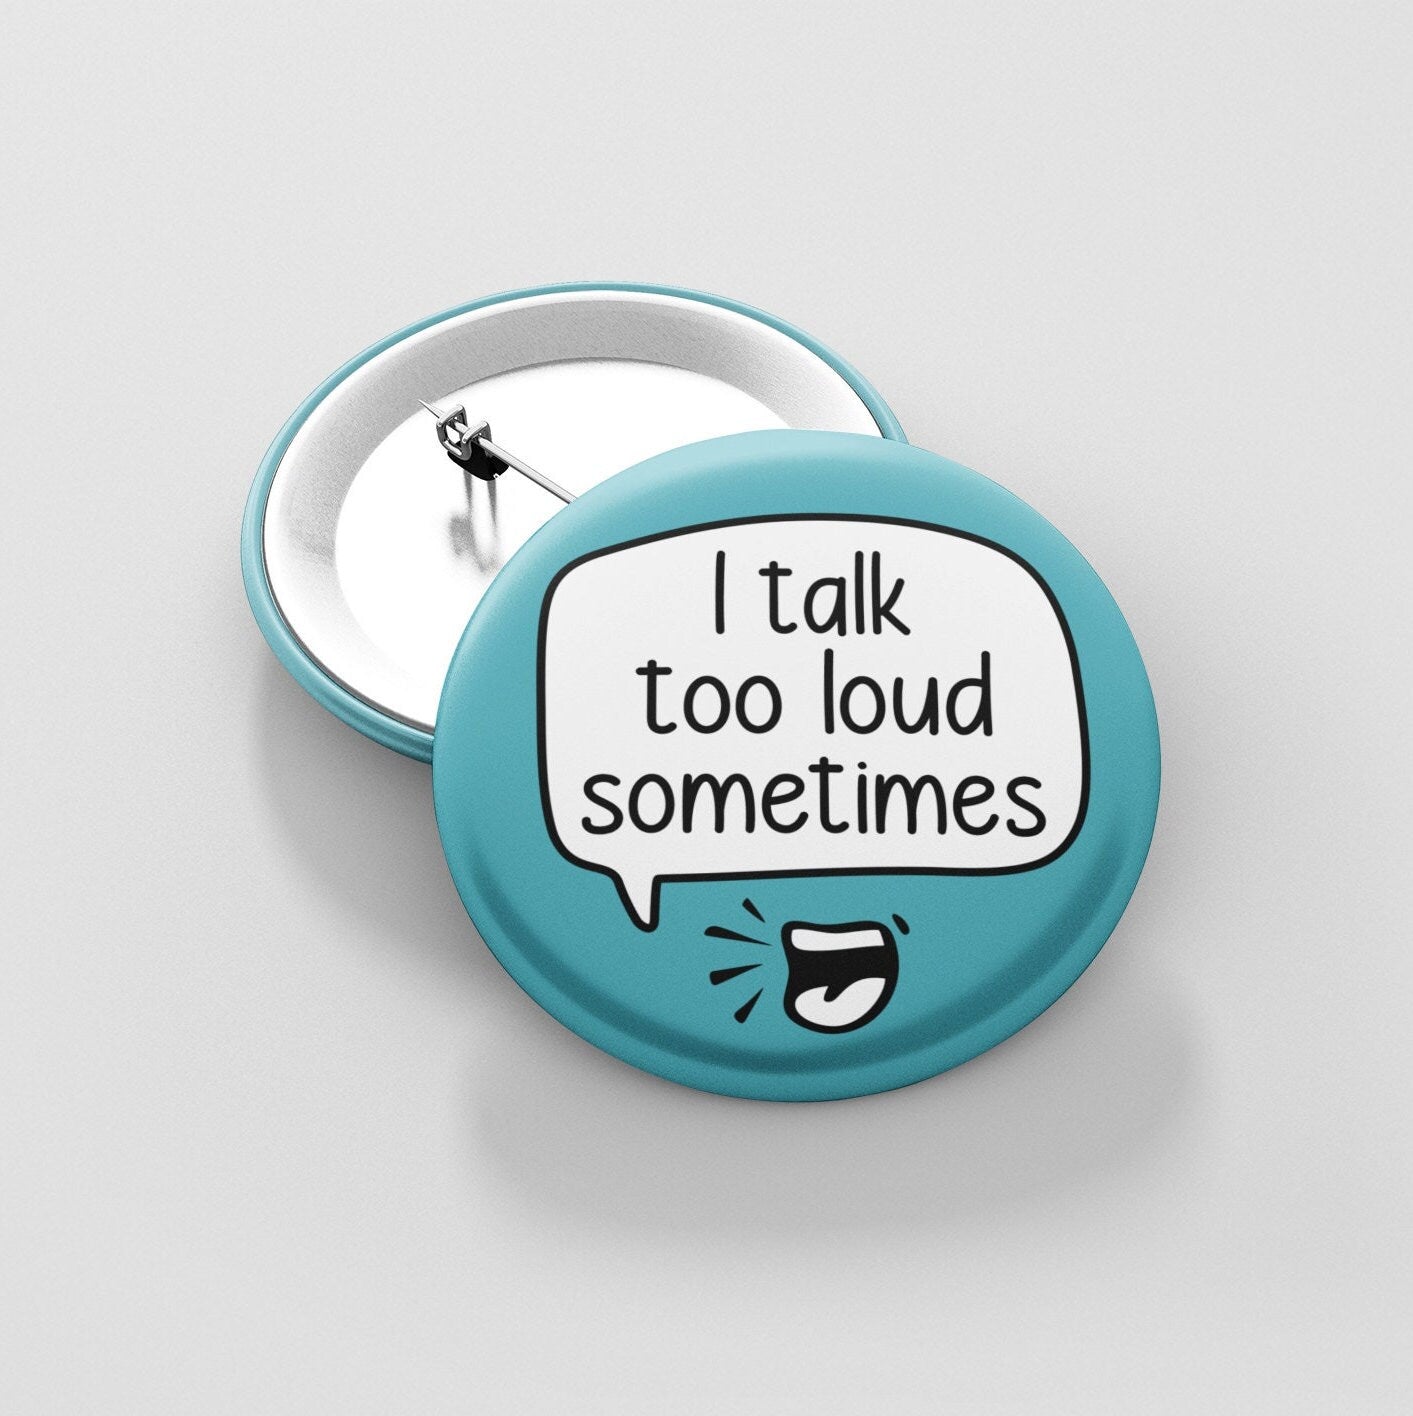 I Talk Too Loud Sometimes - Badge Pin | ADHD Pins - Autism Pins